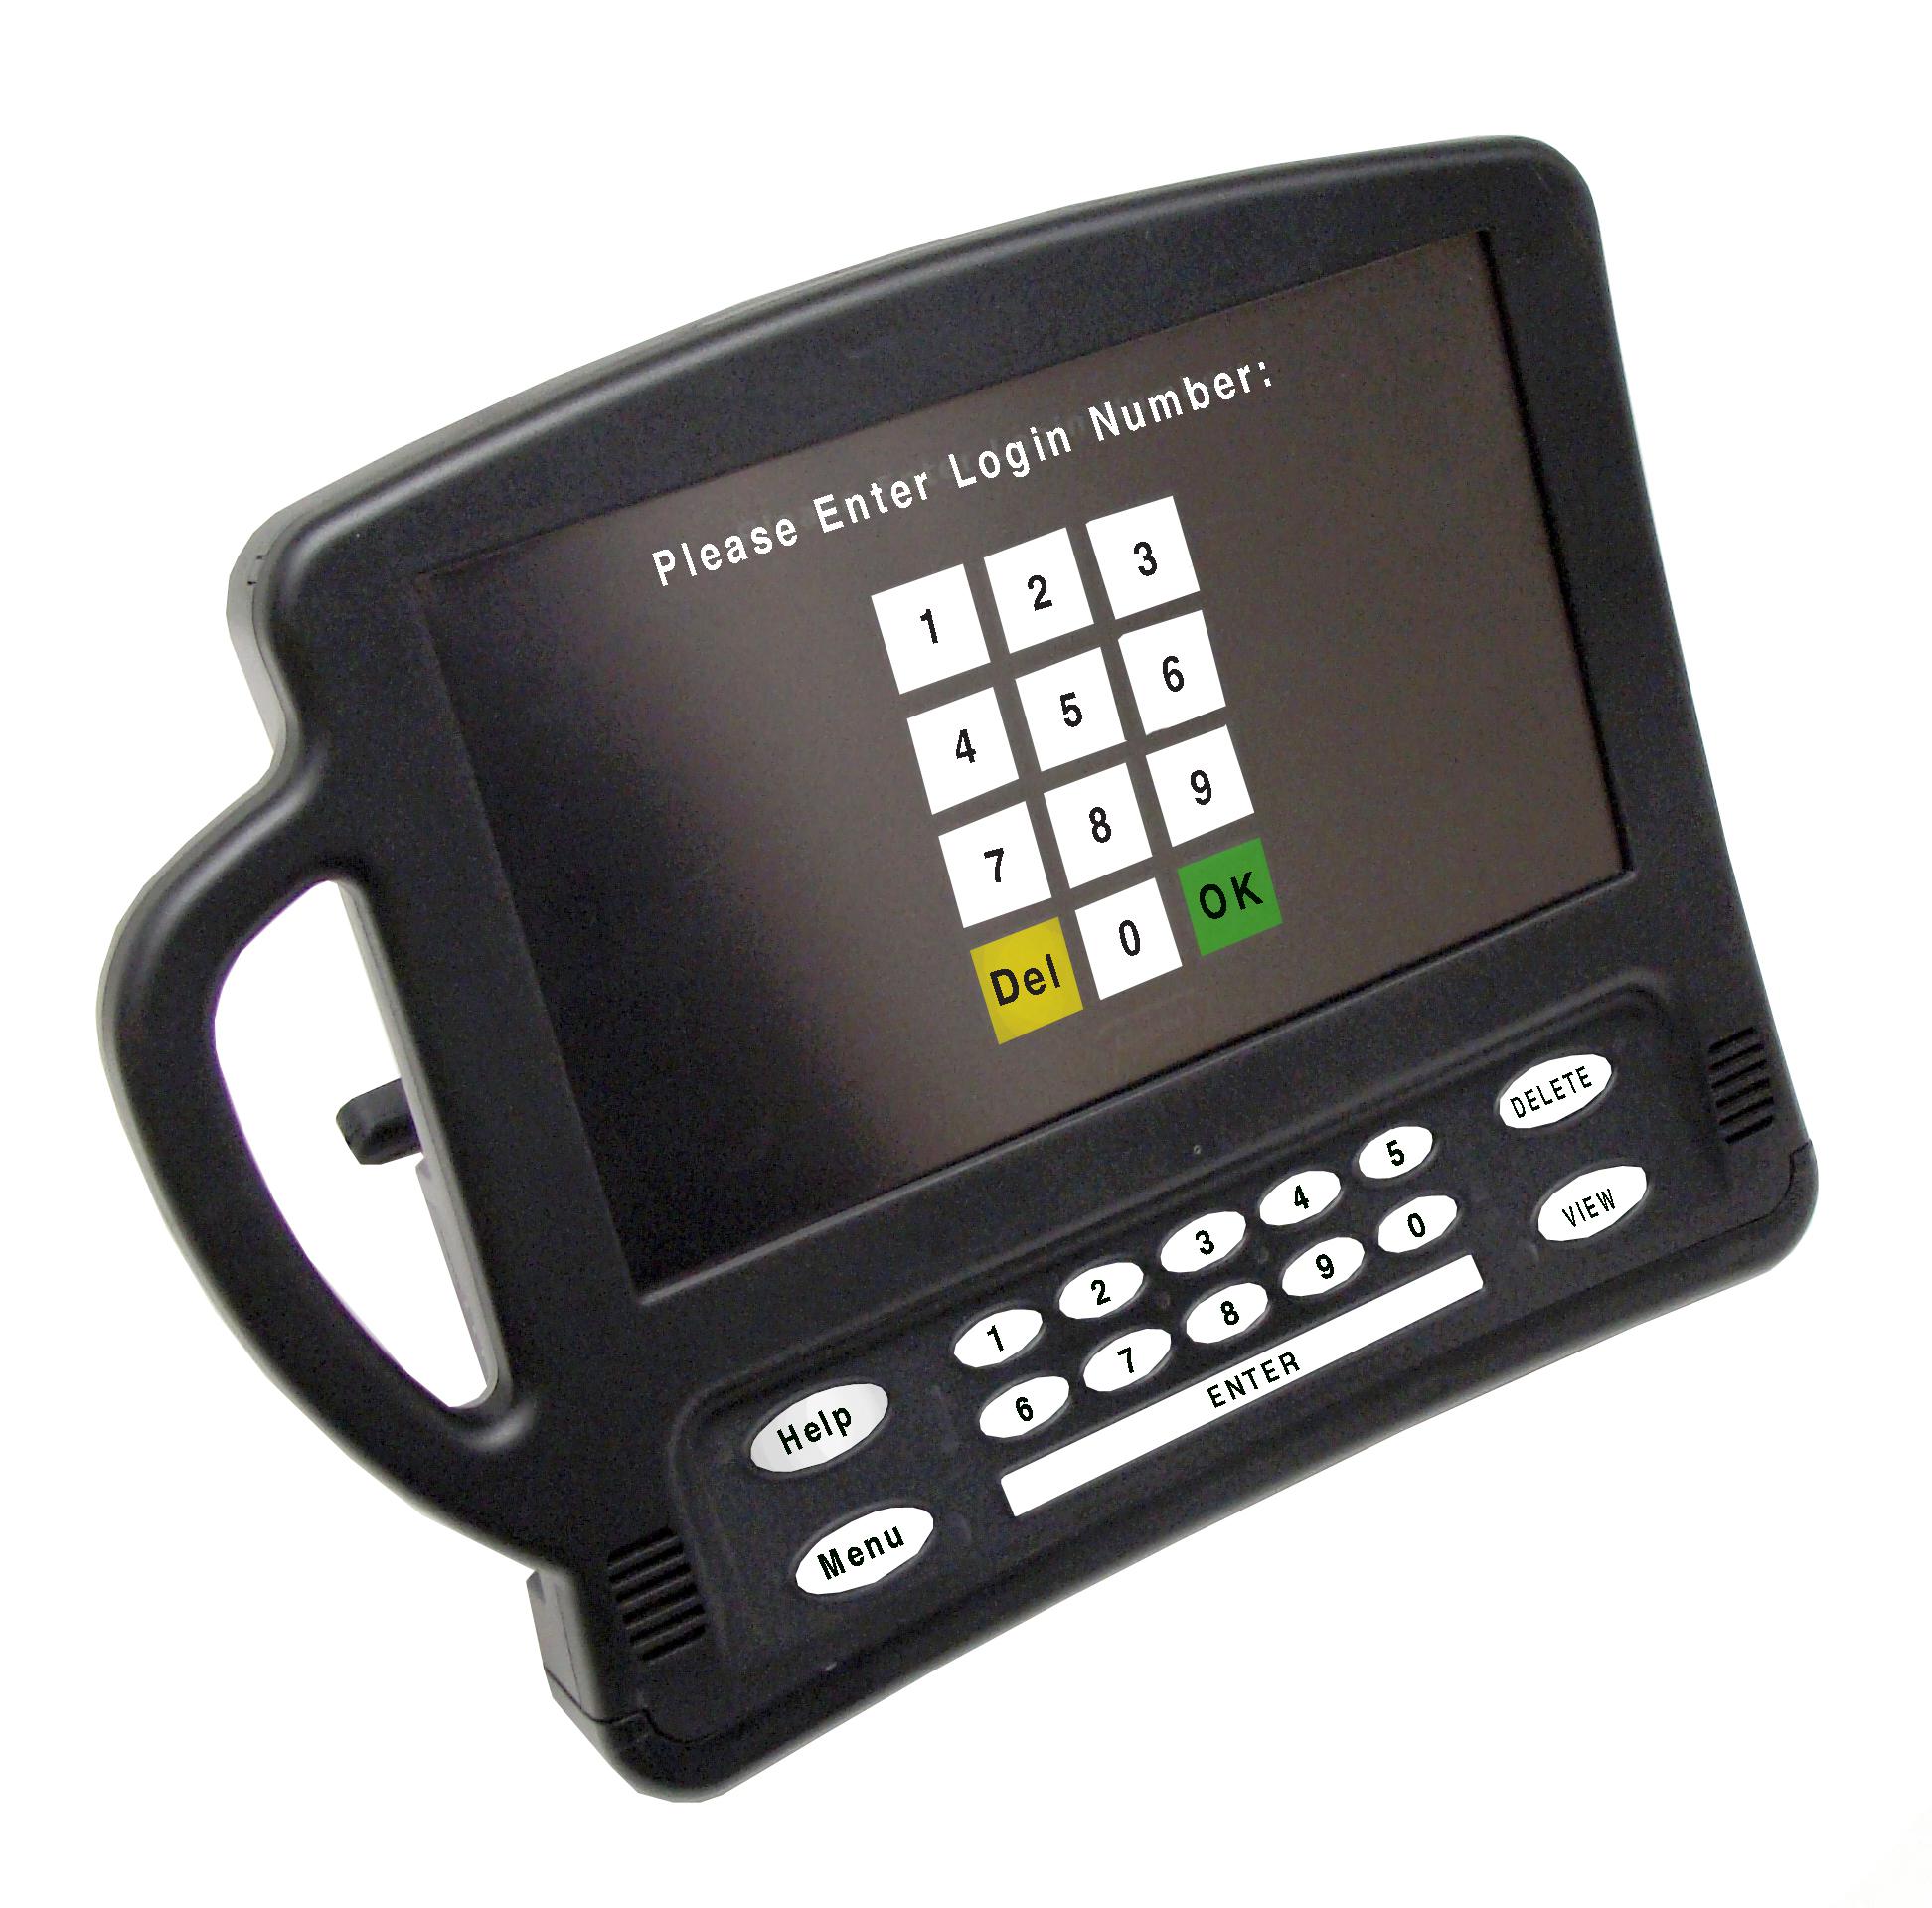 Portable electronic bingo equipment